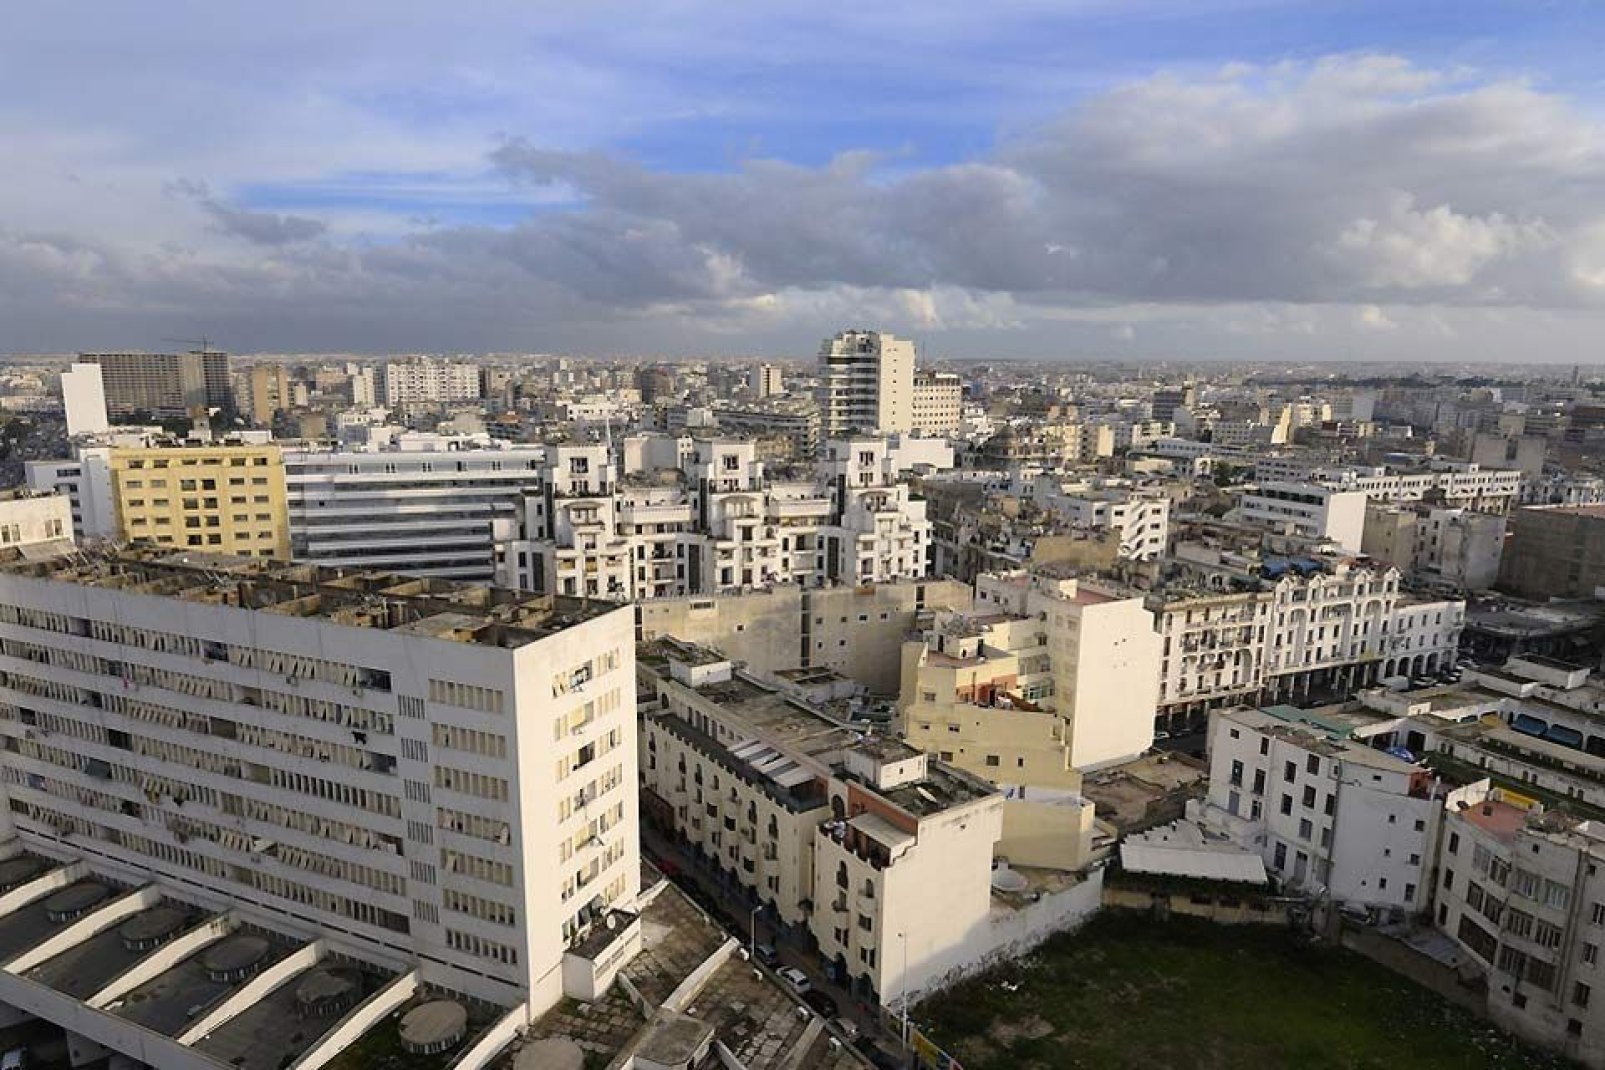 Modern, dynamic Casablanca feels more European than its Moroccan counterparts